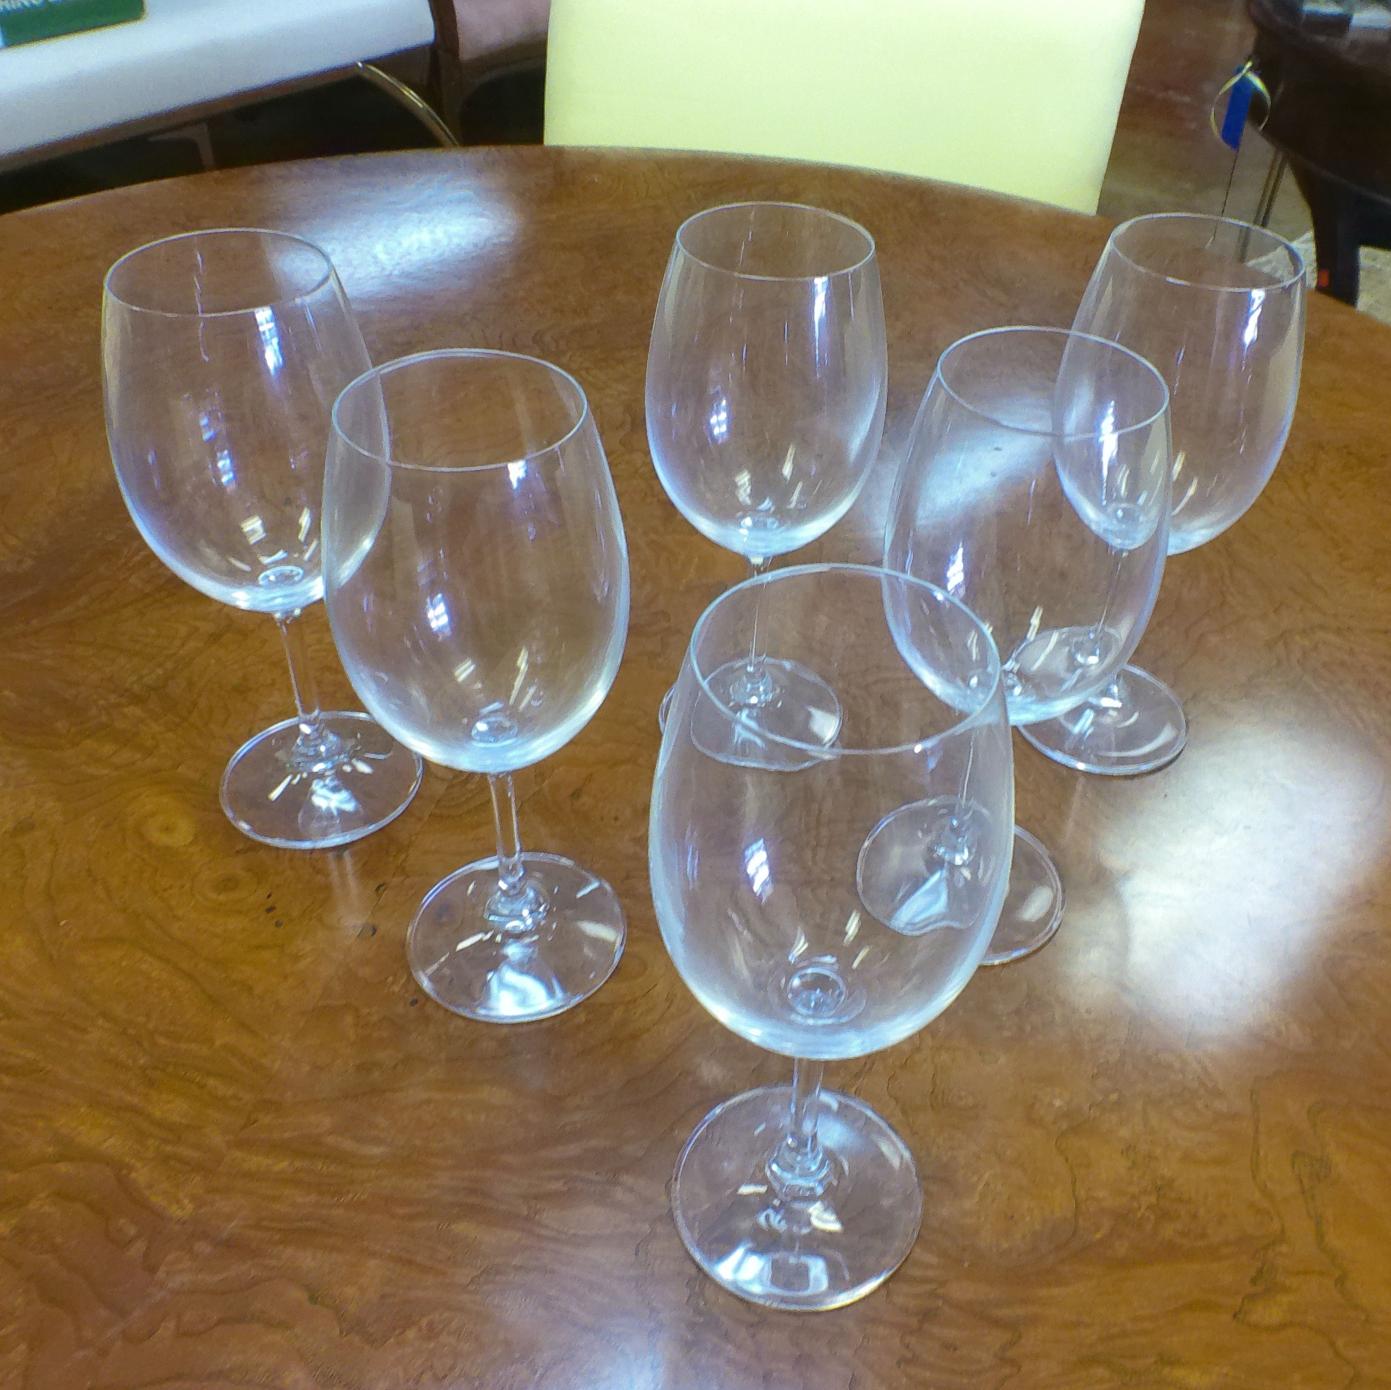 Set of 6 Wine Glasses